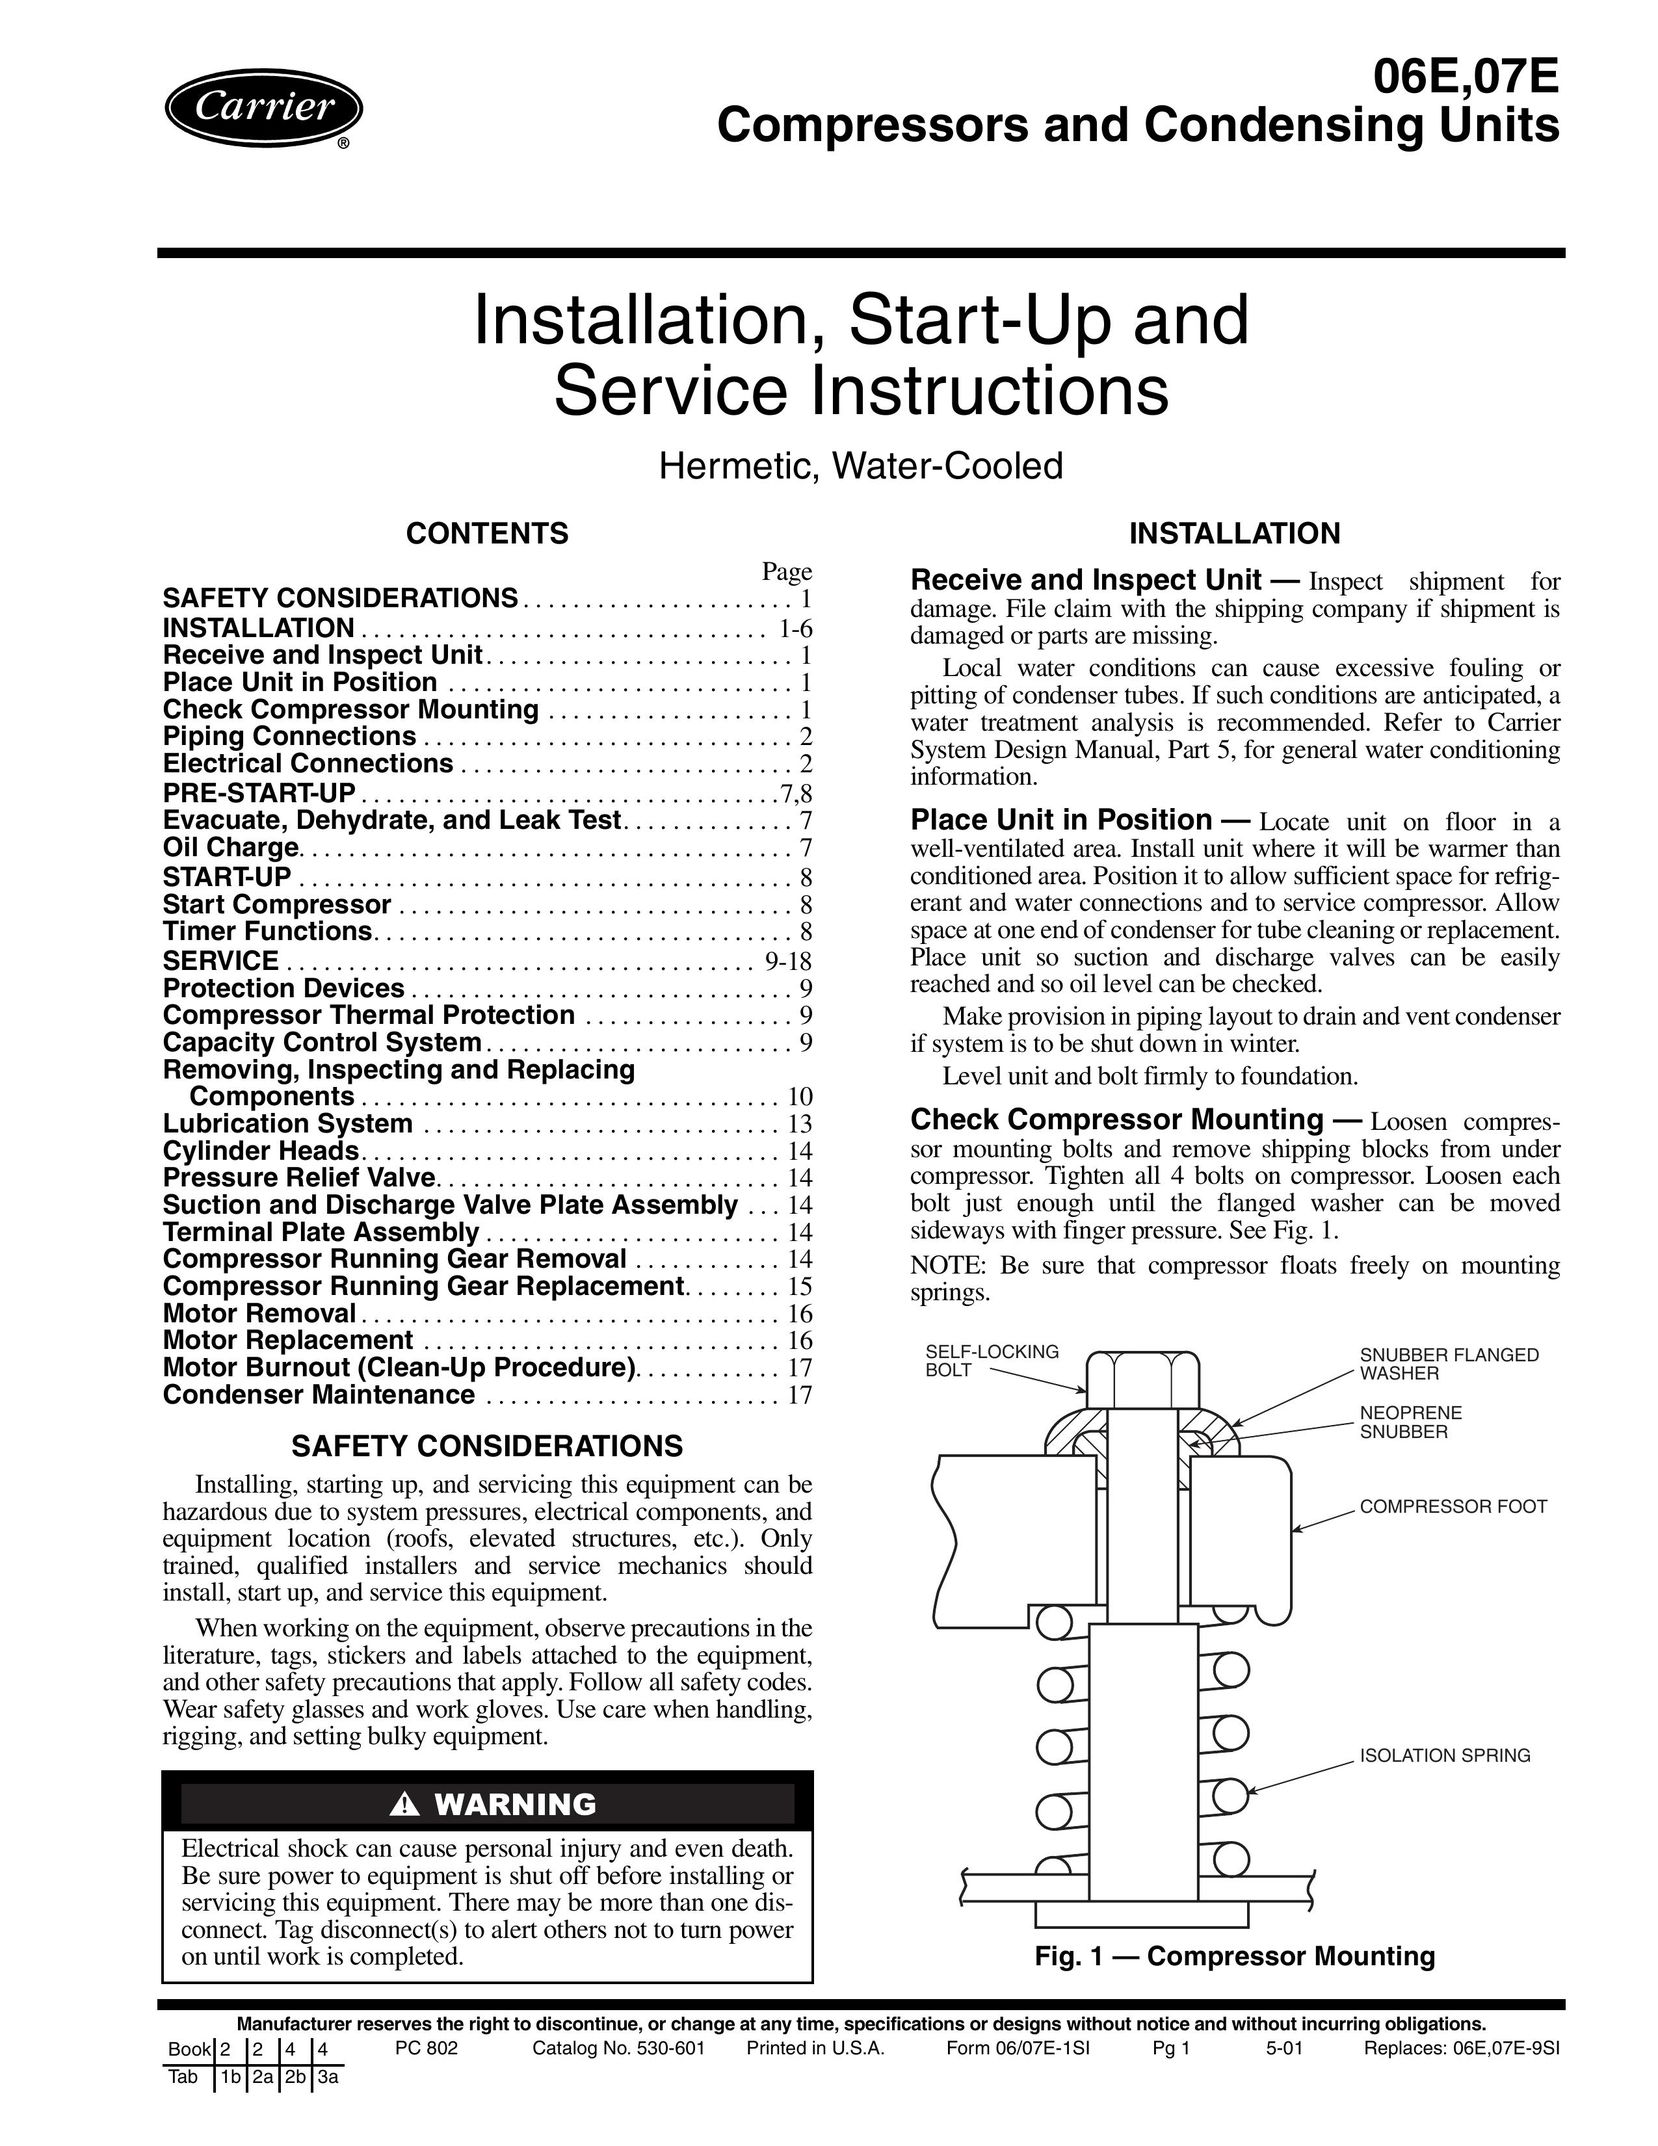 Carrier Compressor and Condensing Unit Air Compressor User Manual